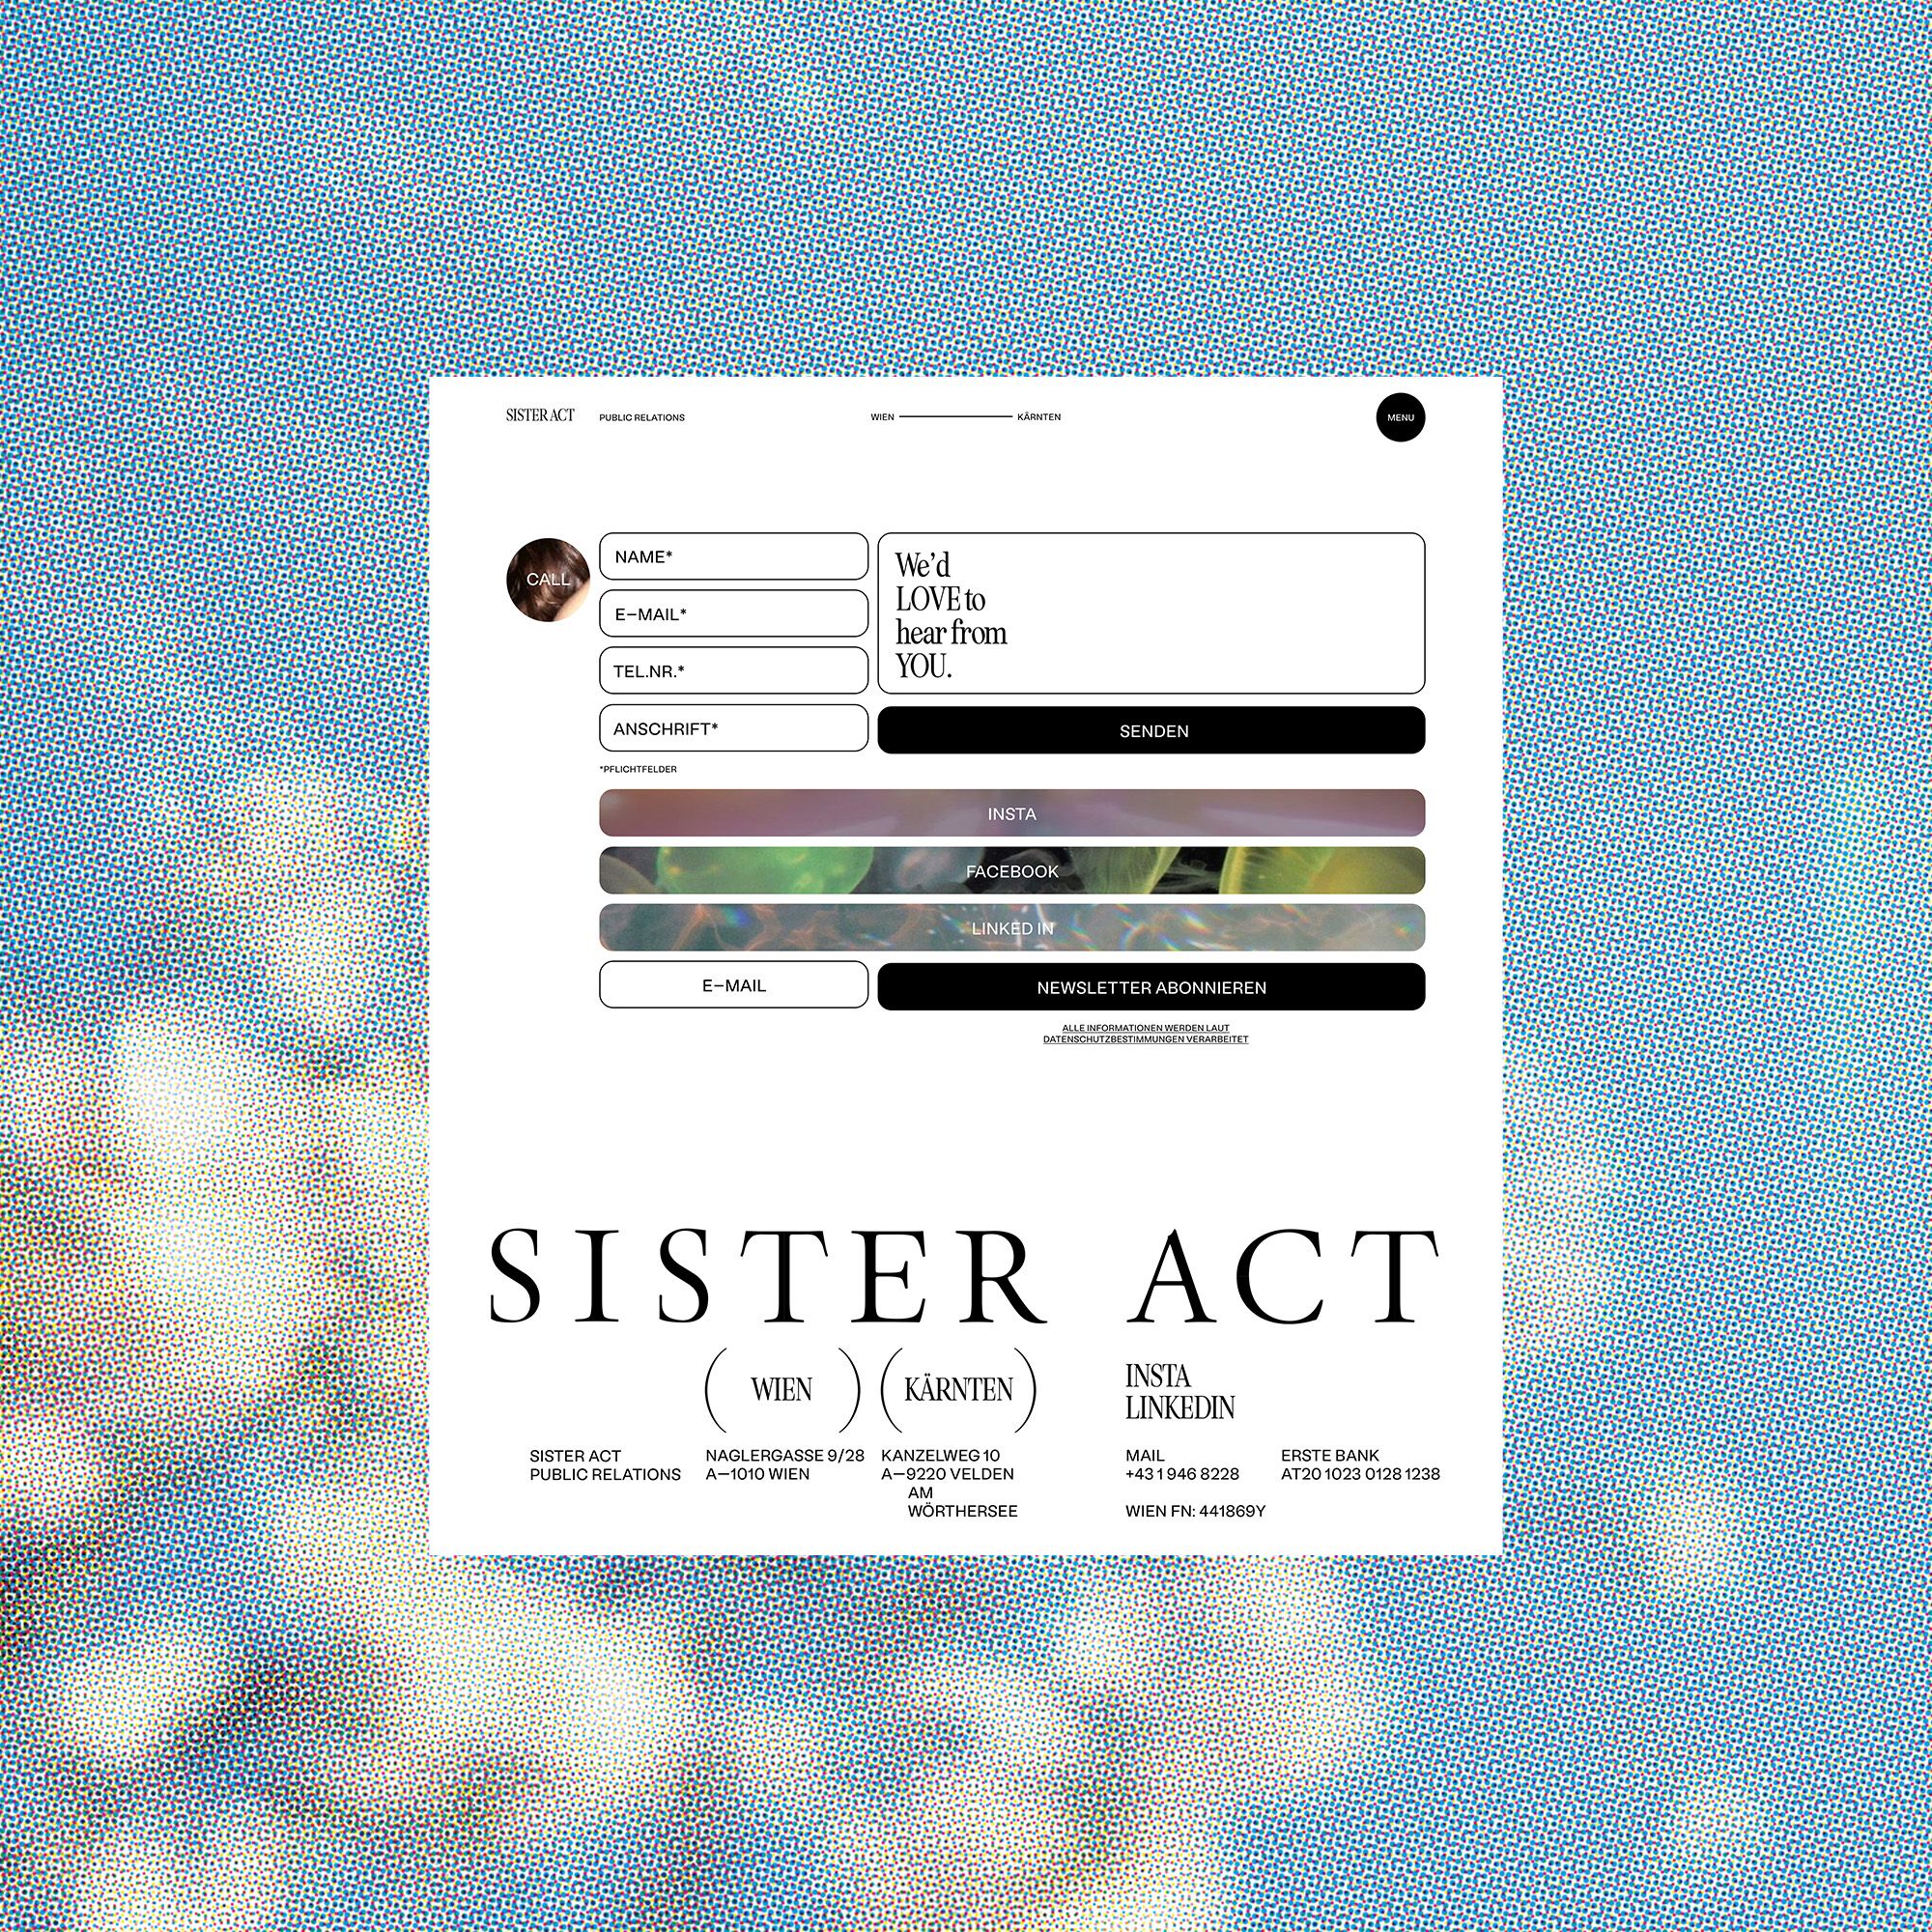 Sister Act Public Relations Branding Website